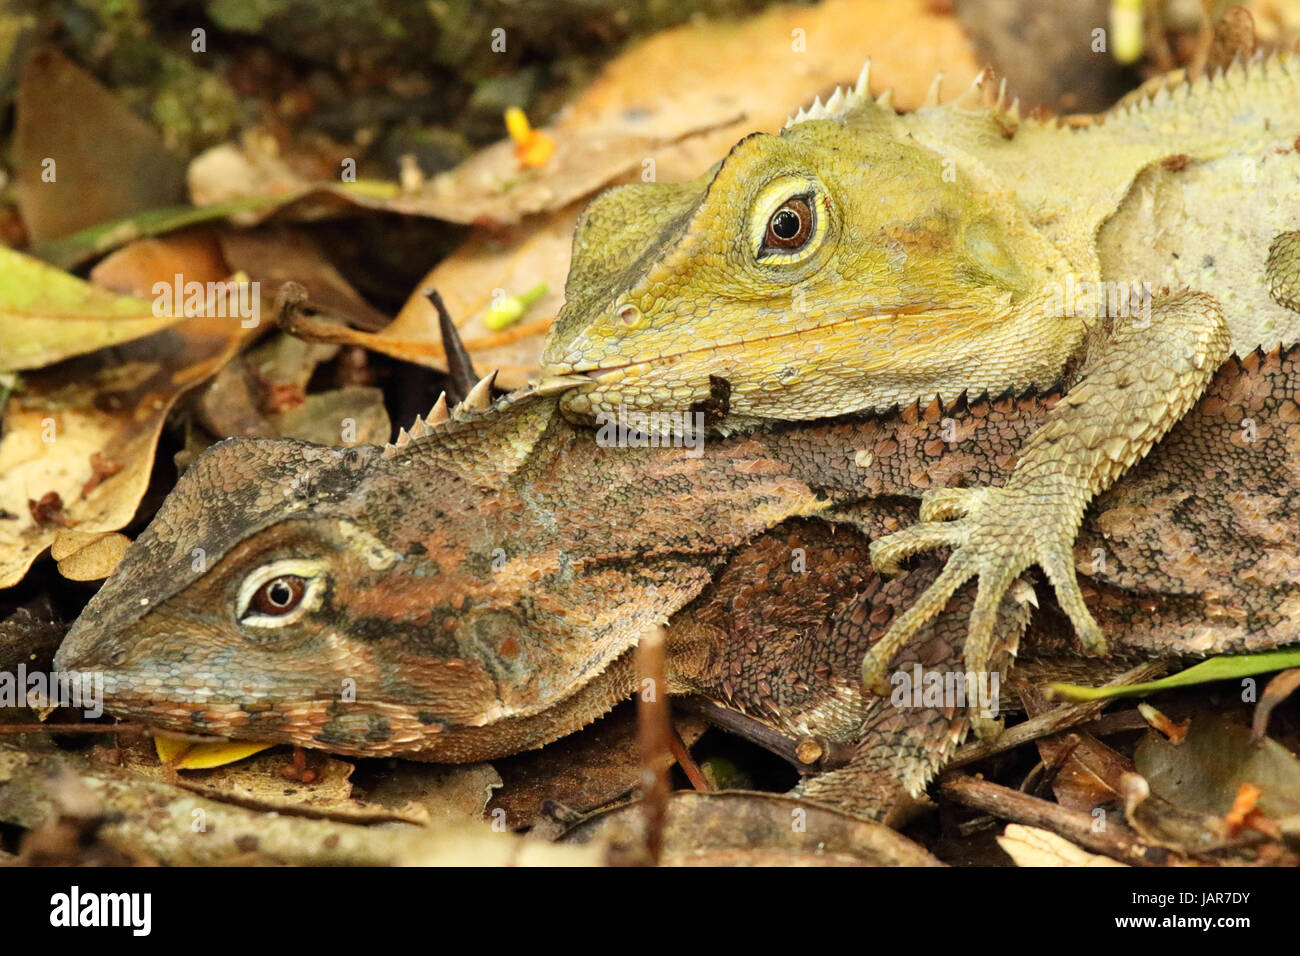 A Monitor Lizard giving a love bite during a courtship ritual in Australia. Stock Photo